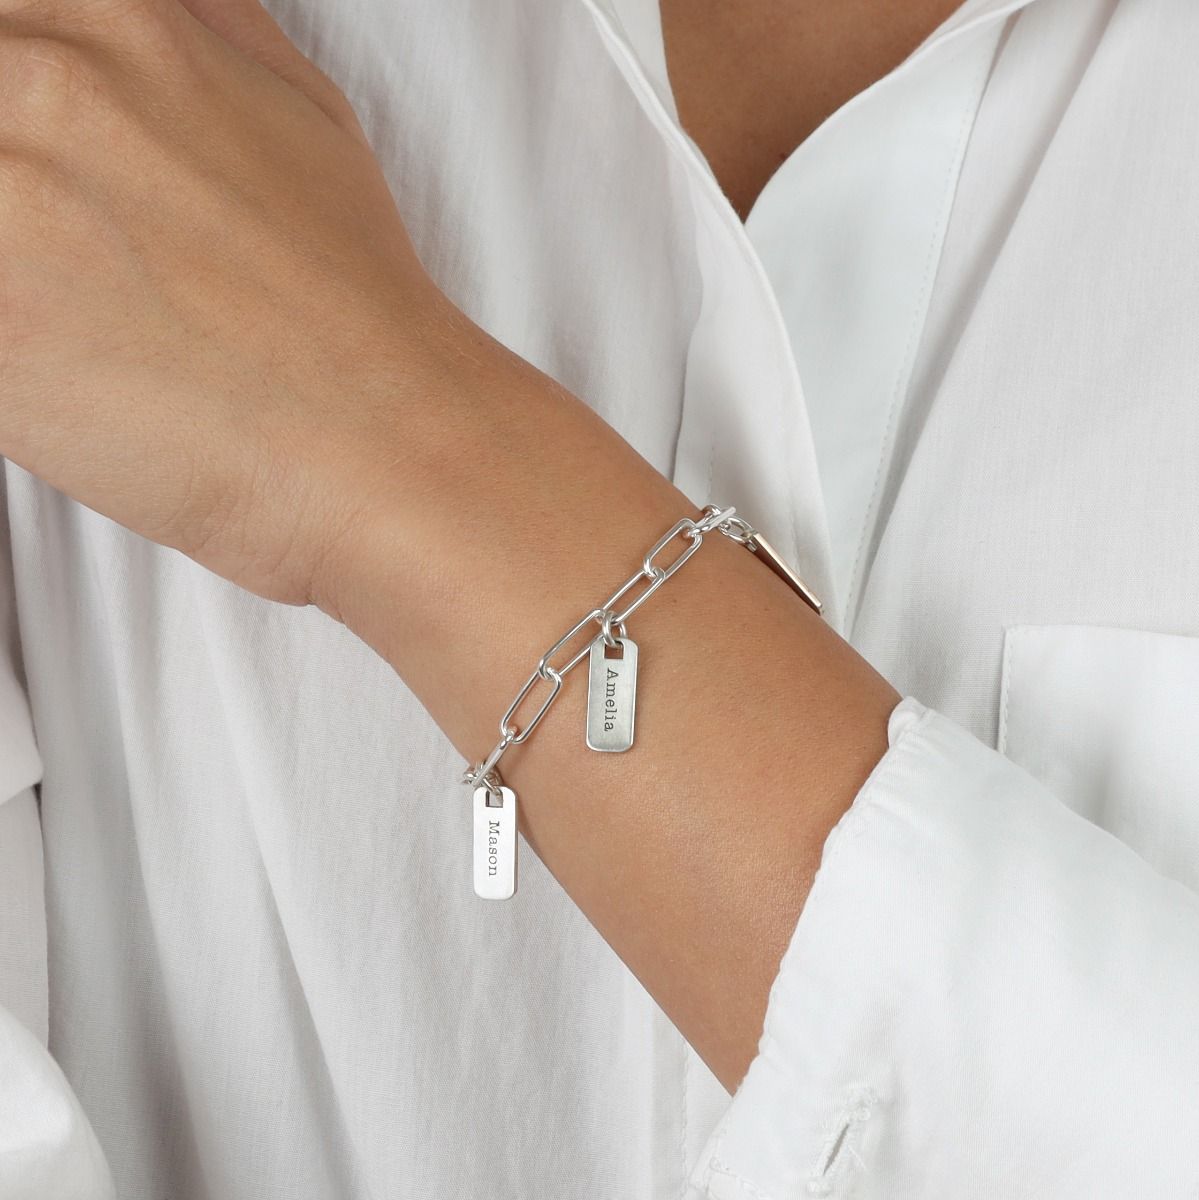 Lauren-Spencer Personalized Heart Charm Bracelet for Women Dainty Gold  Silver Plated Engraved Custom Link Chain Bracelet Toggle Clasp Bracelets  for